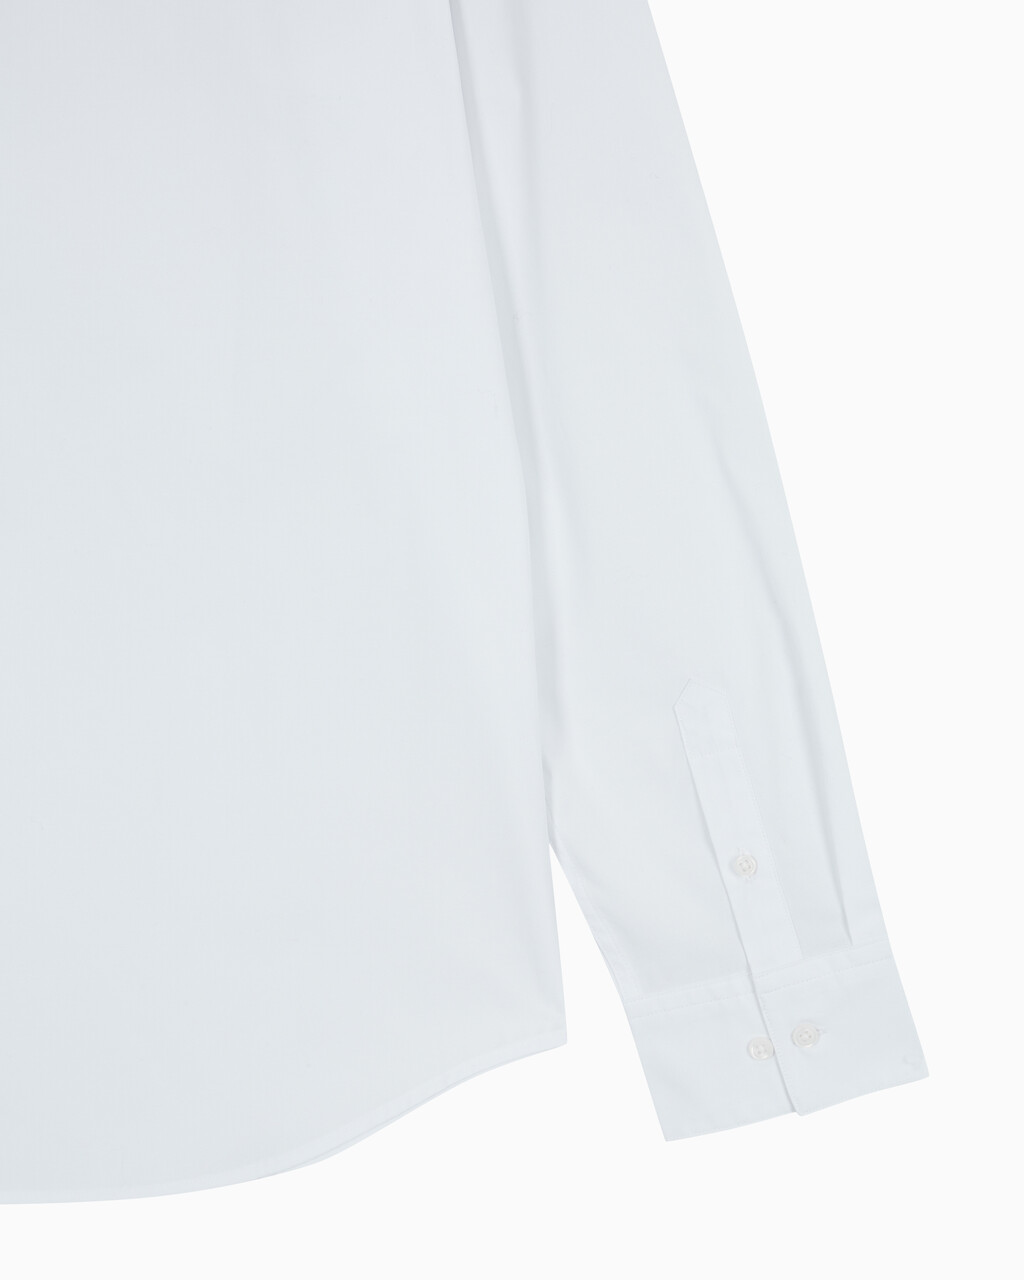 Buy 남성 솔리드 수피마 스트레치 슬림핏 셔츠 in color BRILLIANT WHITE